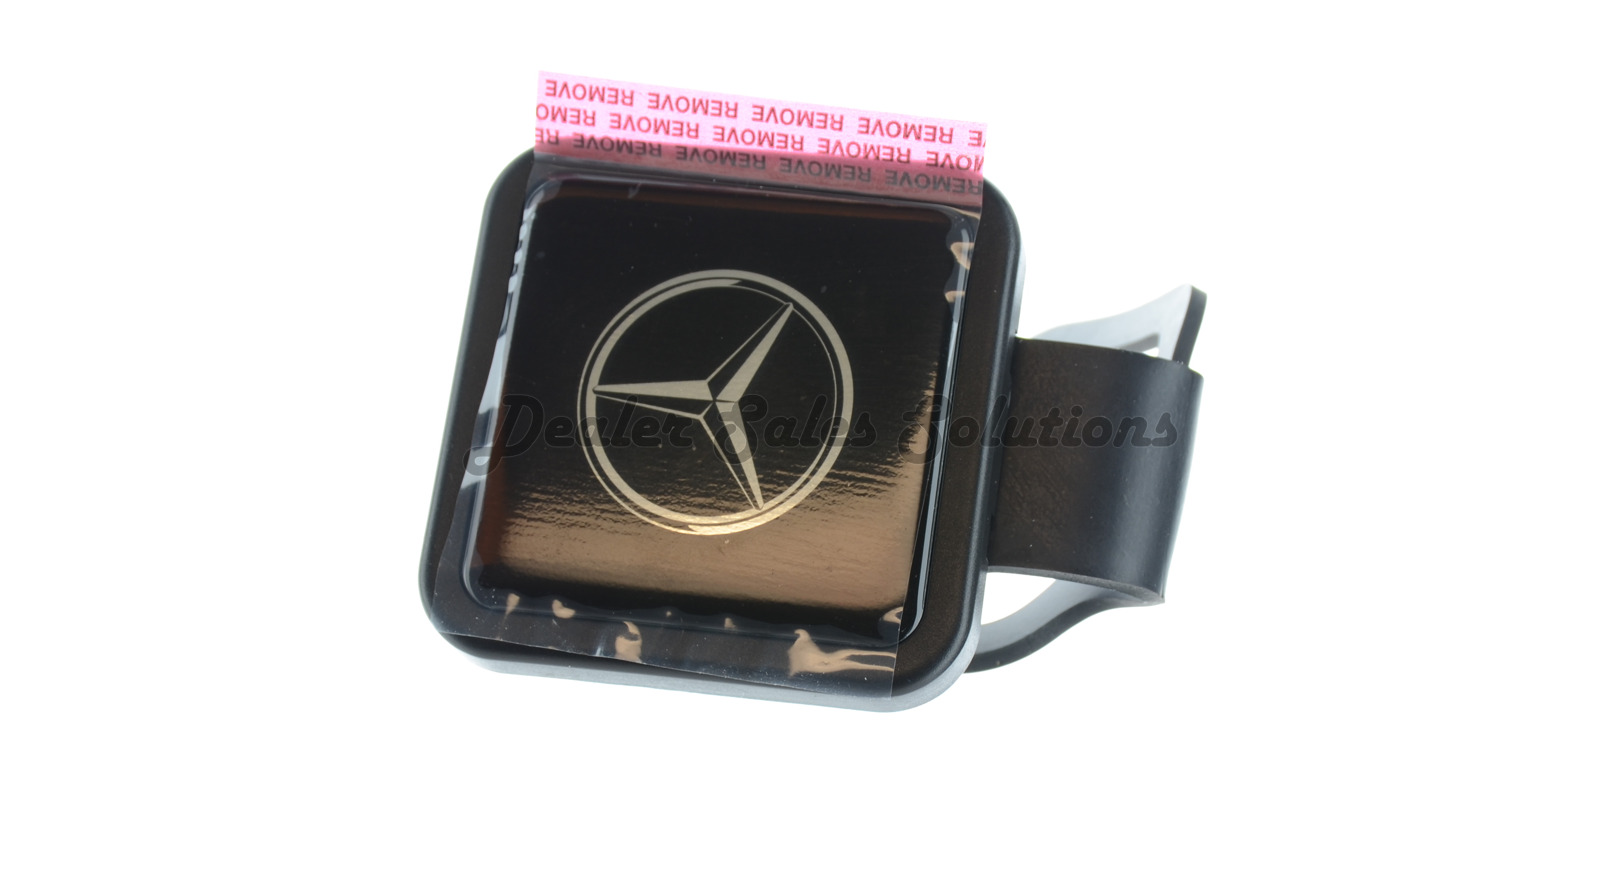 Genuine Mercedes Decorative Star Marque Hitch Trailer Towing Receiver Plug Cover